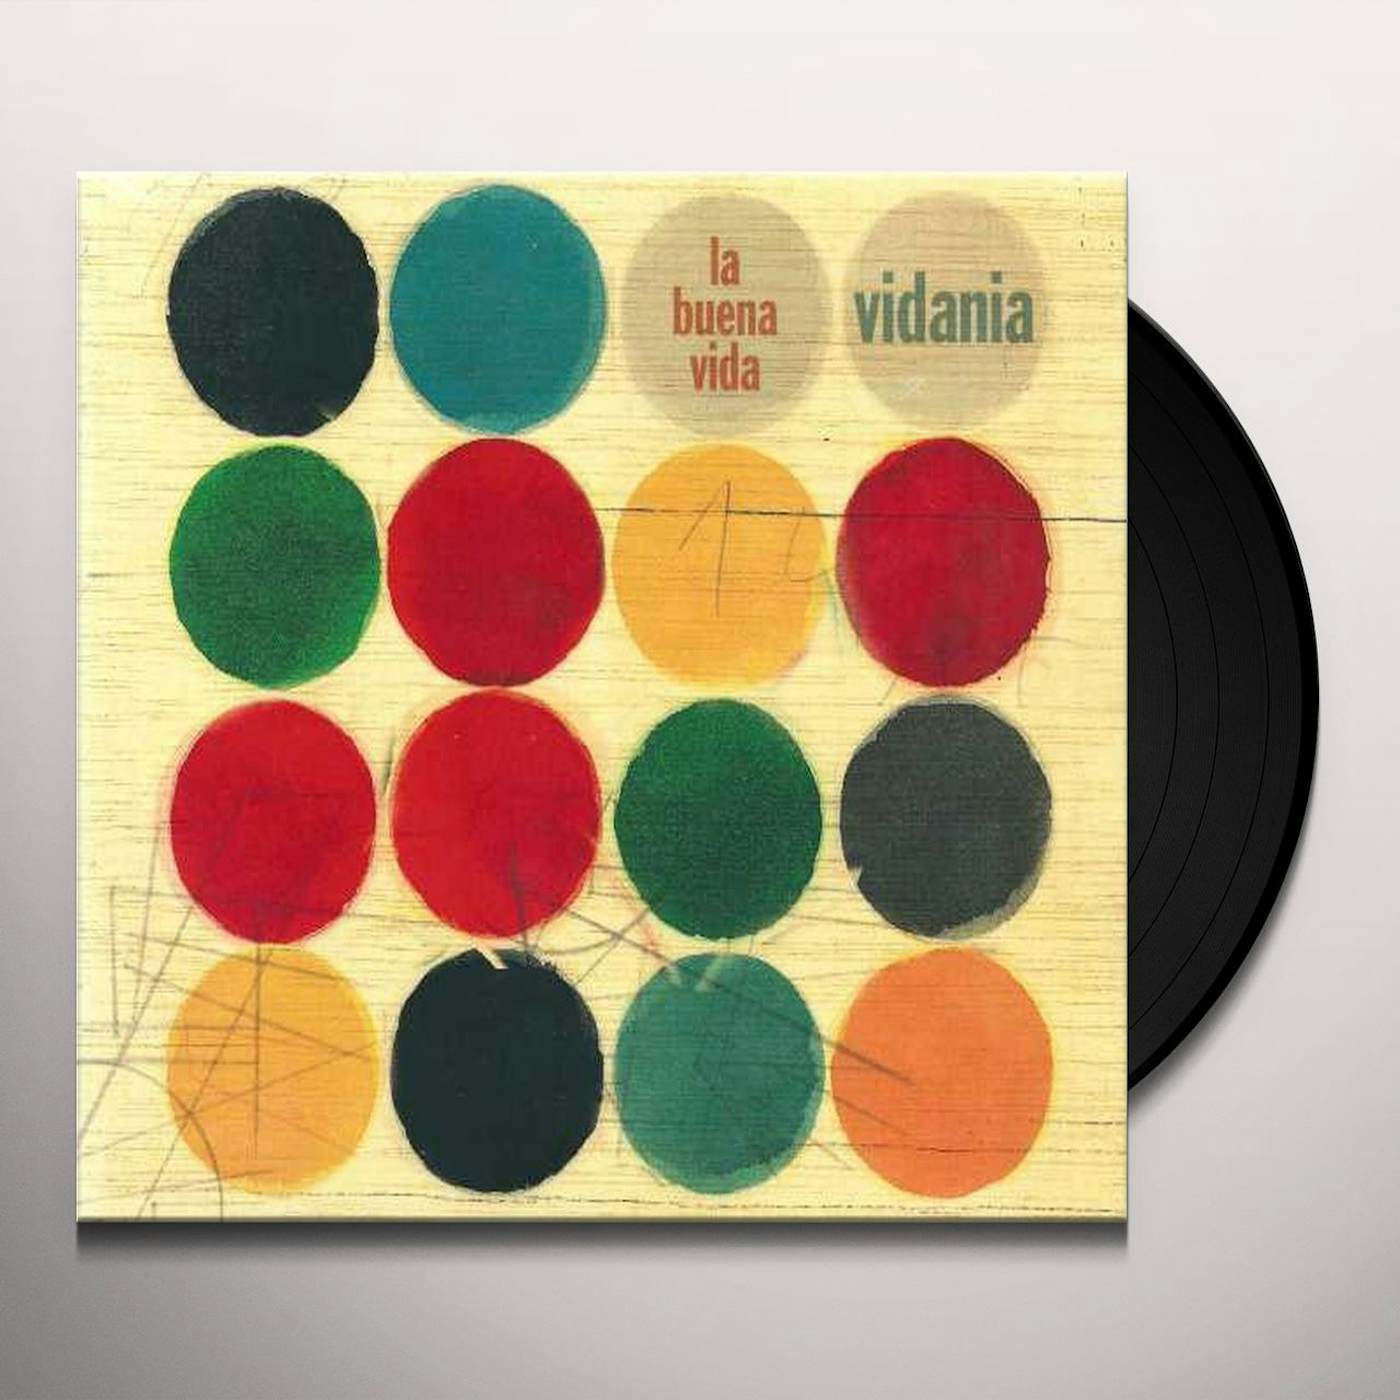 La Buena Vida Vidania Vinyl Record